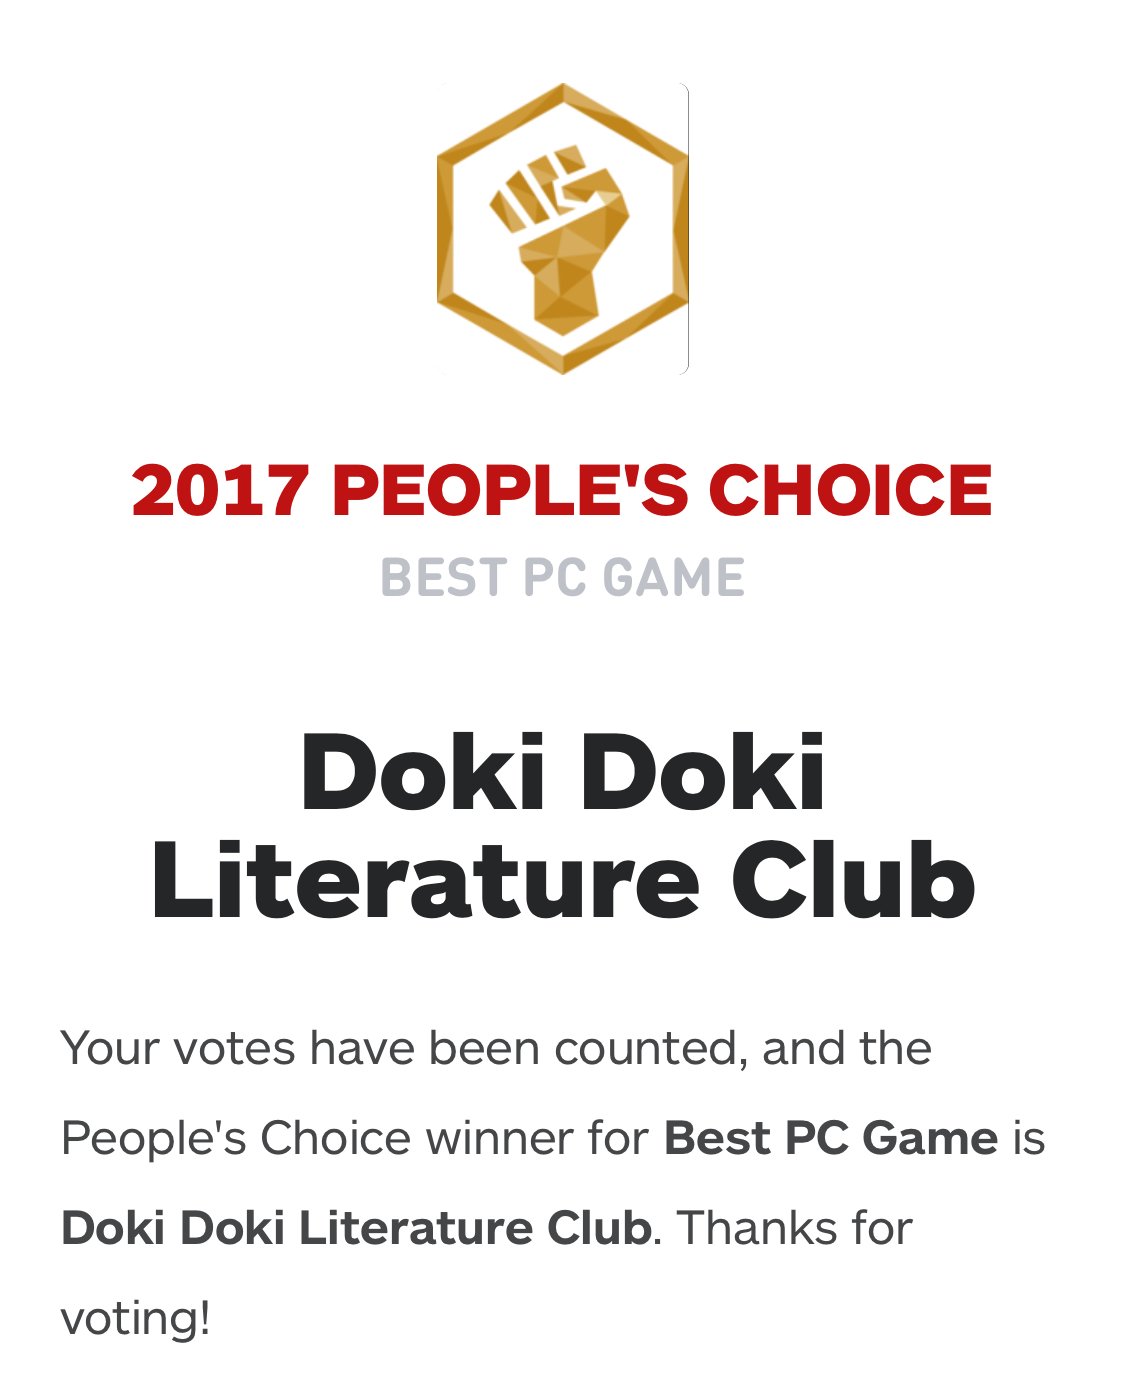 Doki Doki Literature Club Creator Discusses His Next Projects - IGN